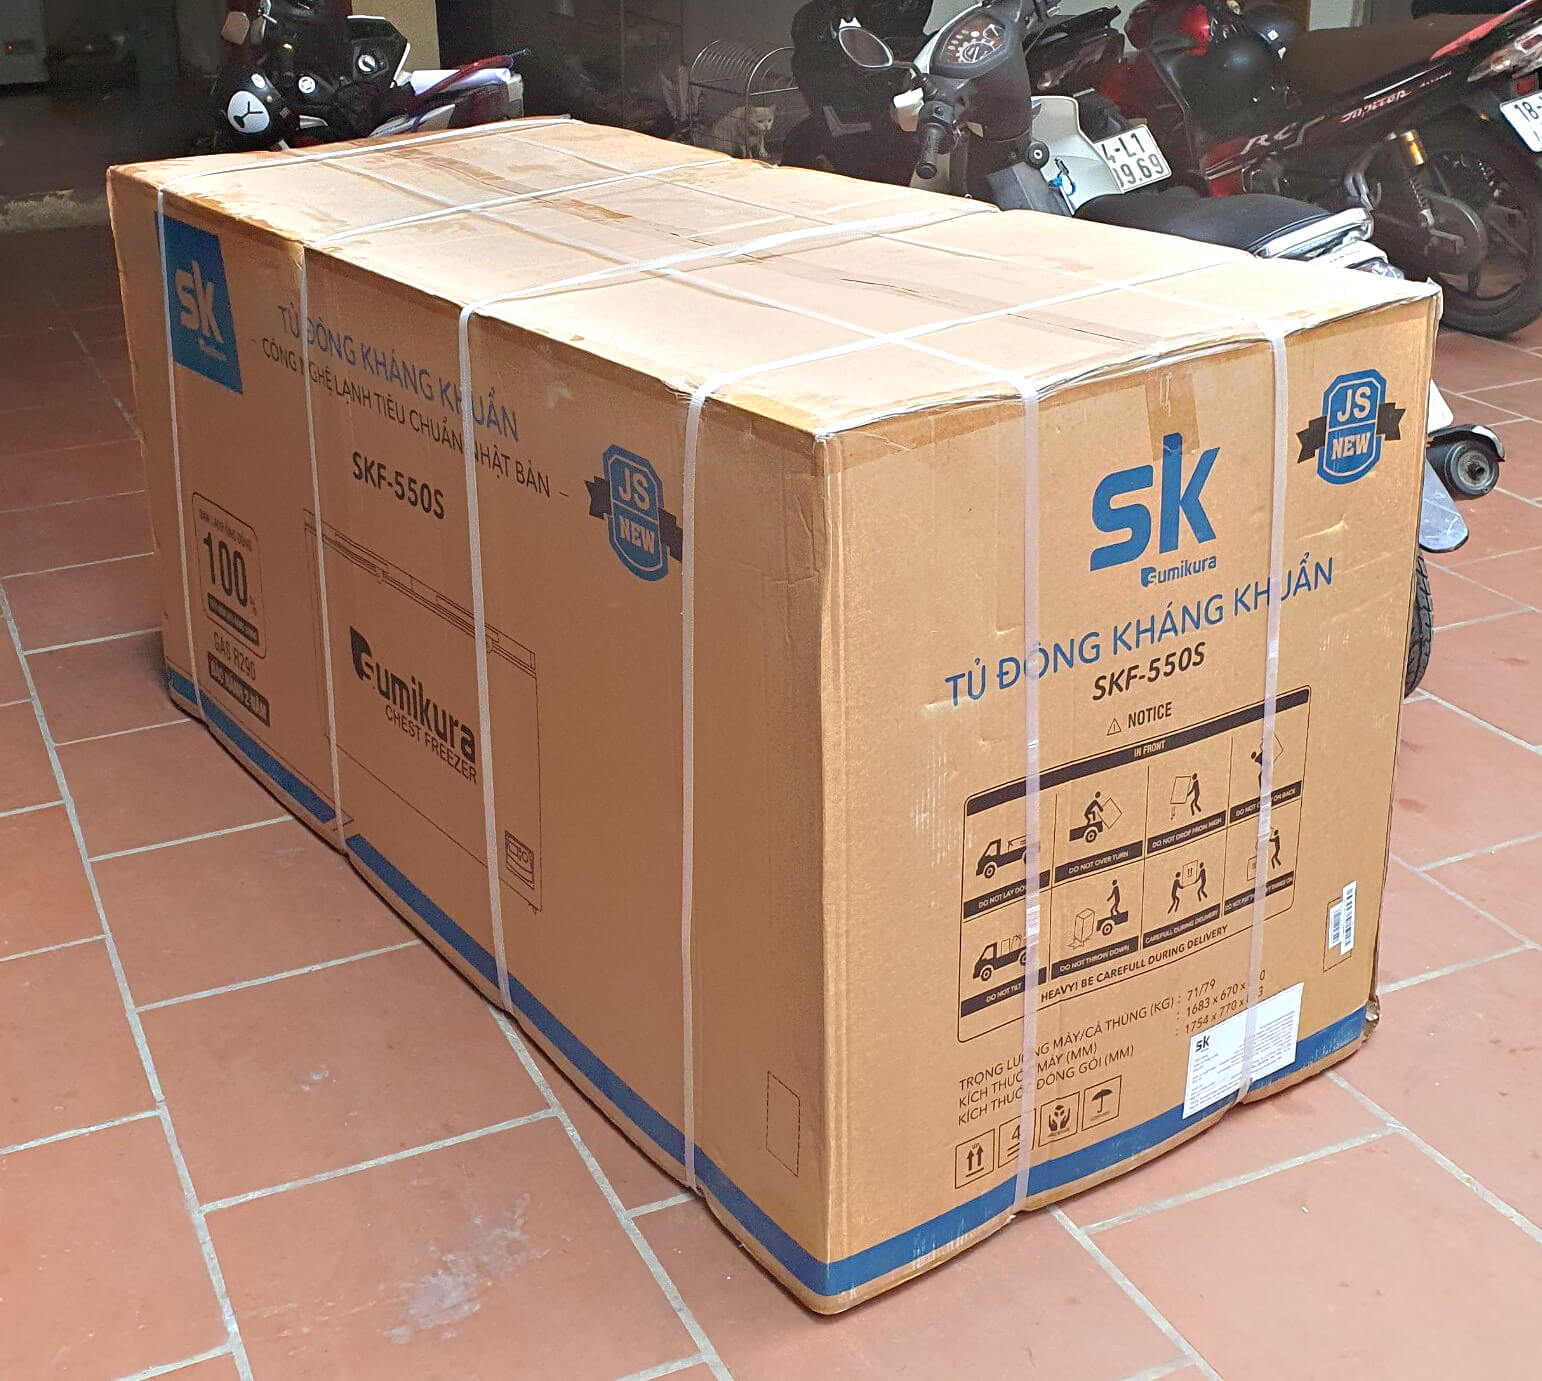 SKF-550S